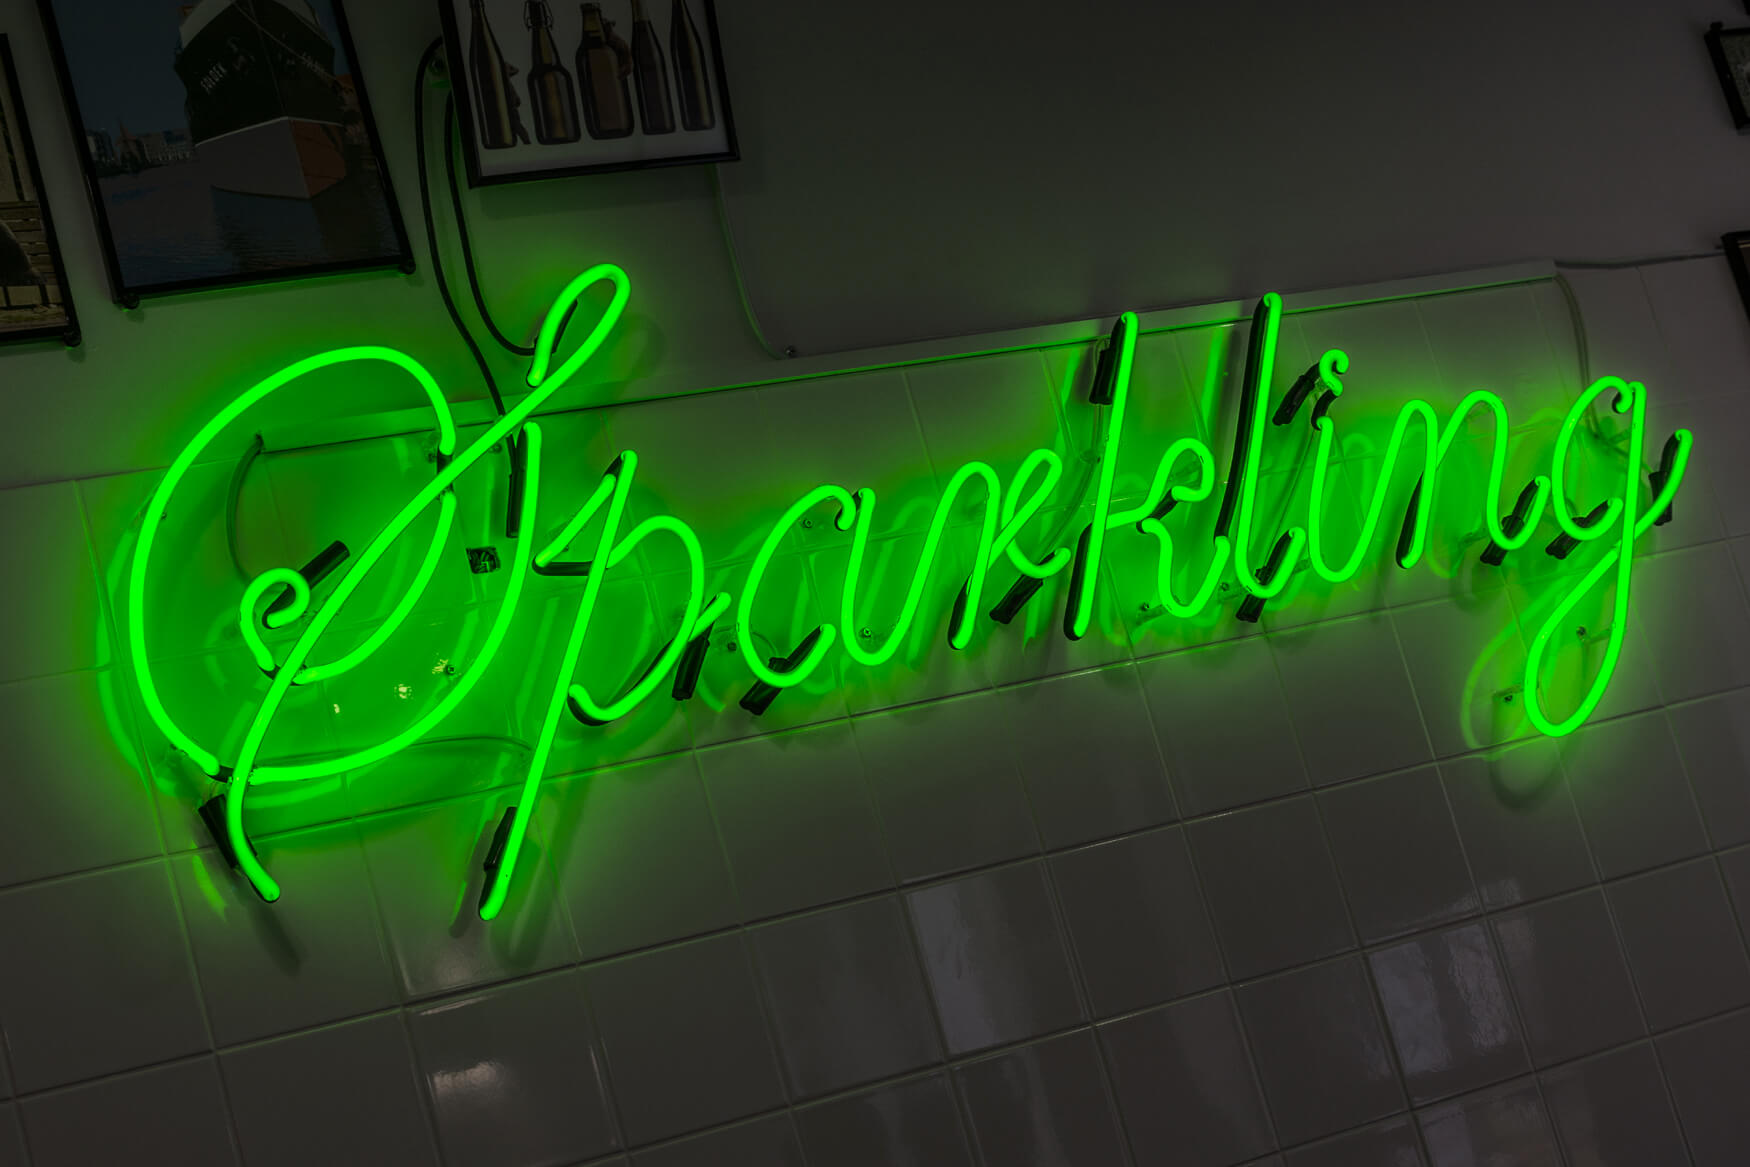 Chispeante - neón-brillante-iluminación-verde-neón-en-los-azulejos-neón-en-la-pared-neón-dentro-del-restaurante-moderno-neón-letras-neón-señal